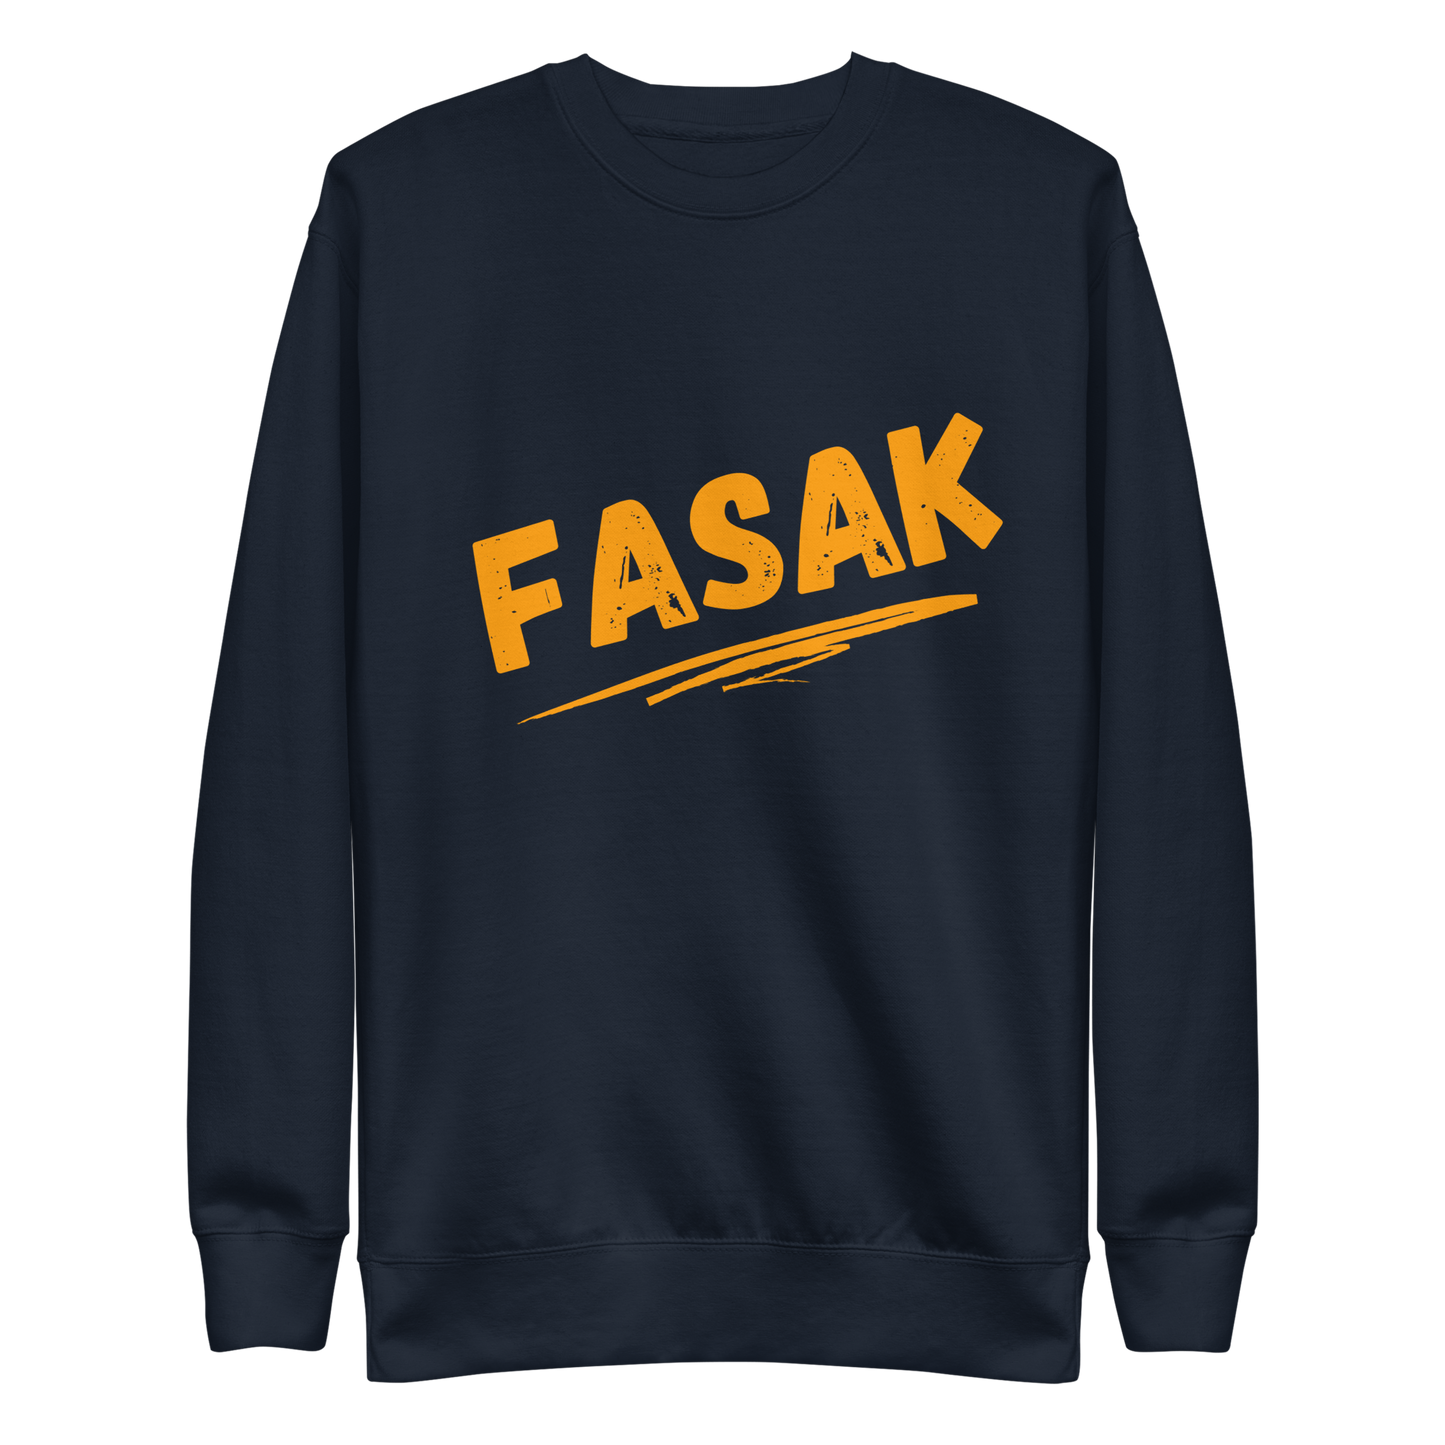 Elevate Your Wardrobe: Fasak Printed Unisex Sweatshirt - Stylish Comfort for Every Occasion